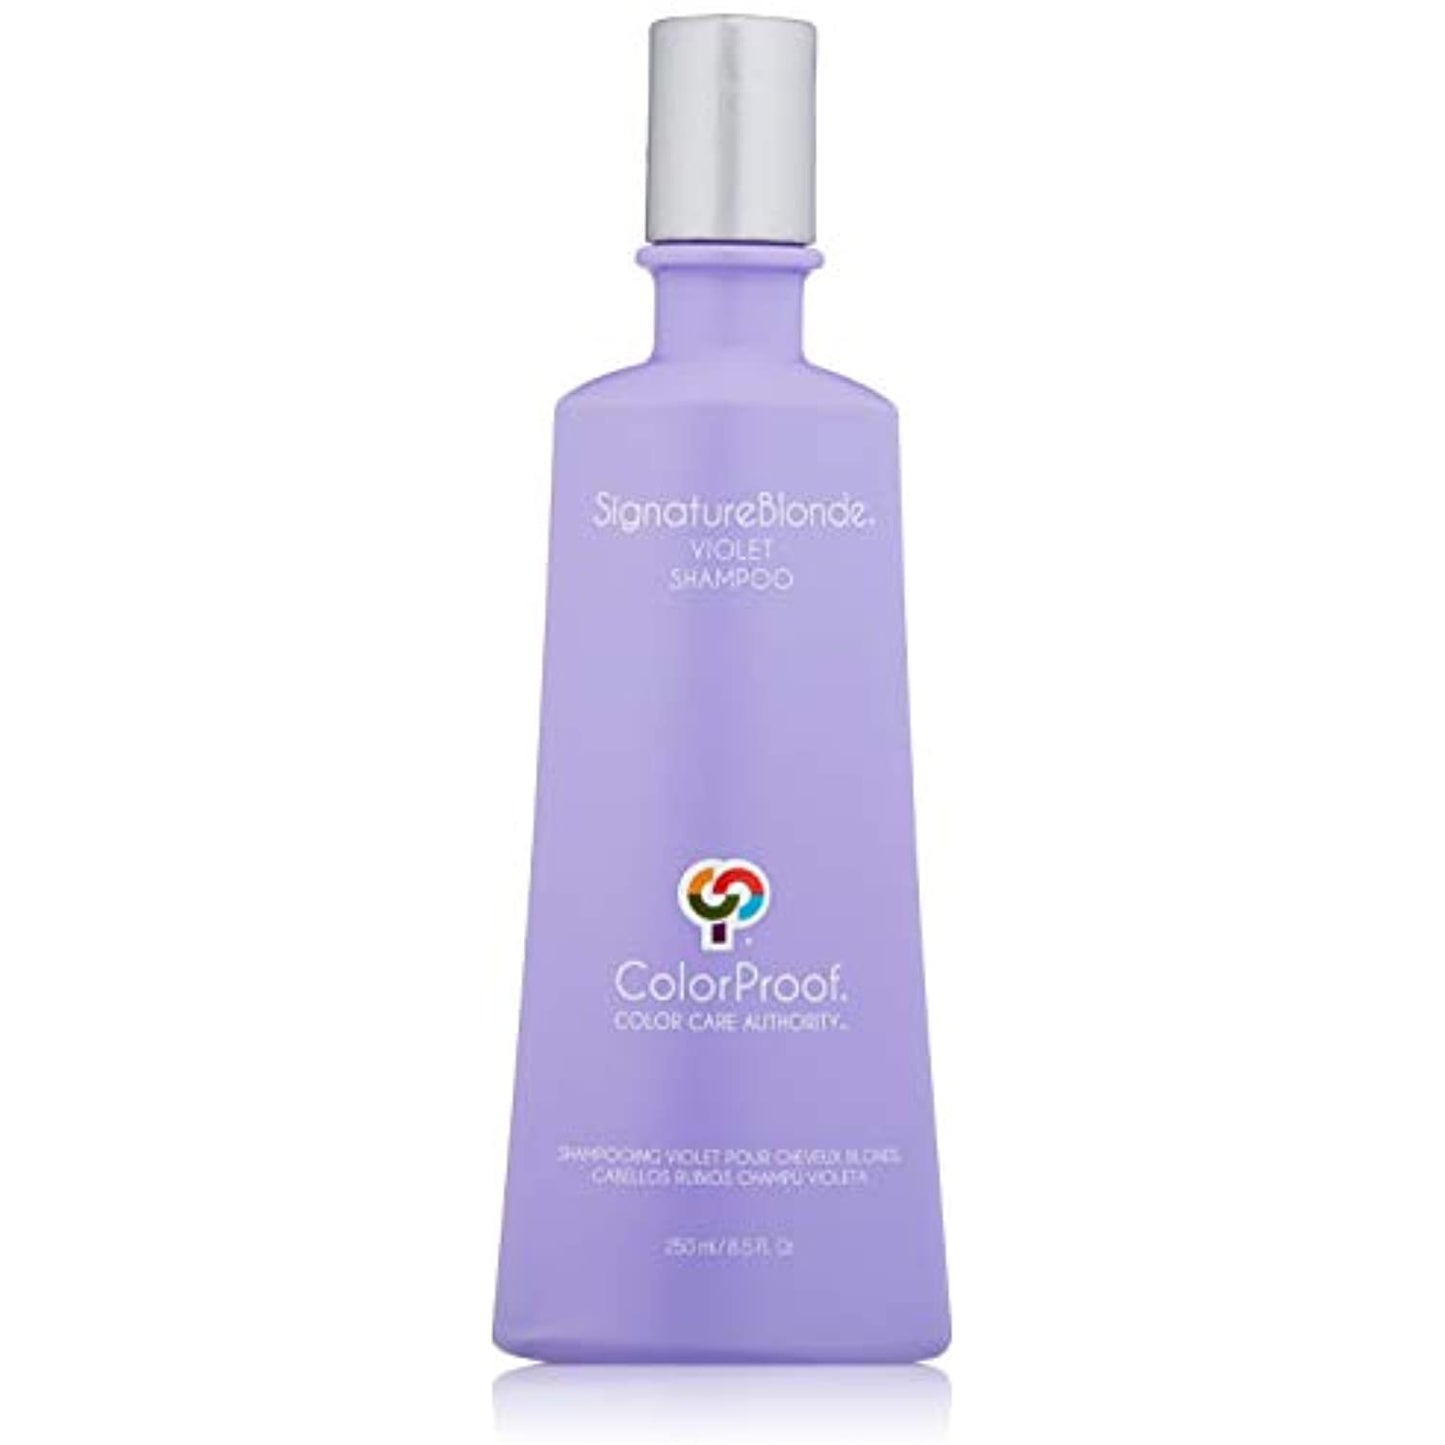 ColorProof SignatureBlonde Violet Shampoo 8.5 oz